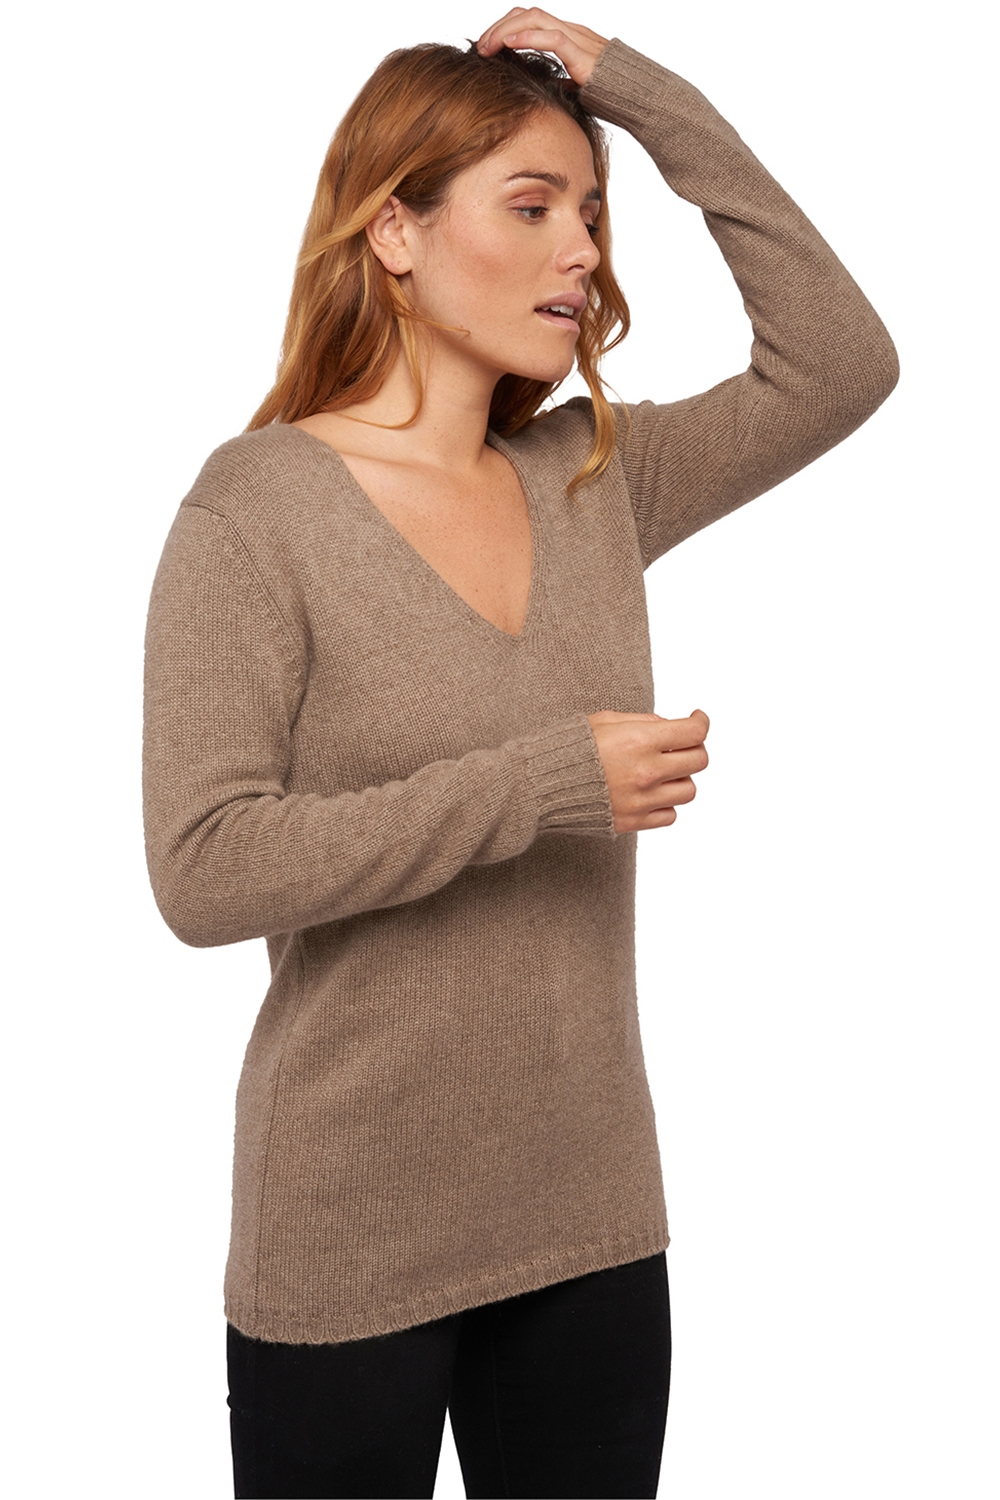  ladies chunky sweater natural vava natural brown s